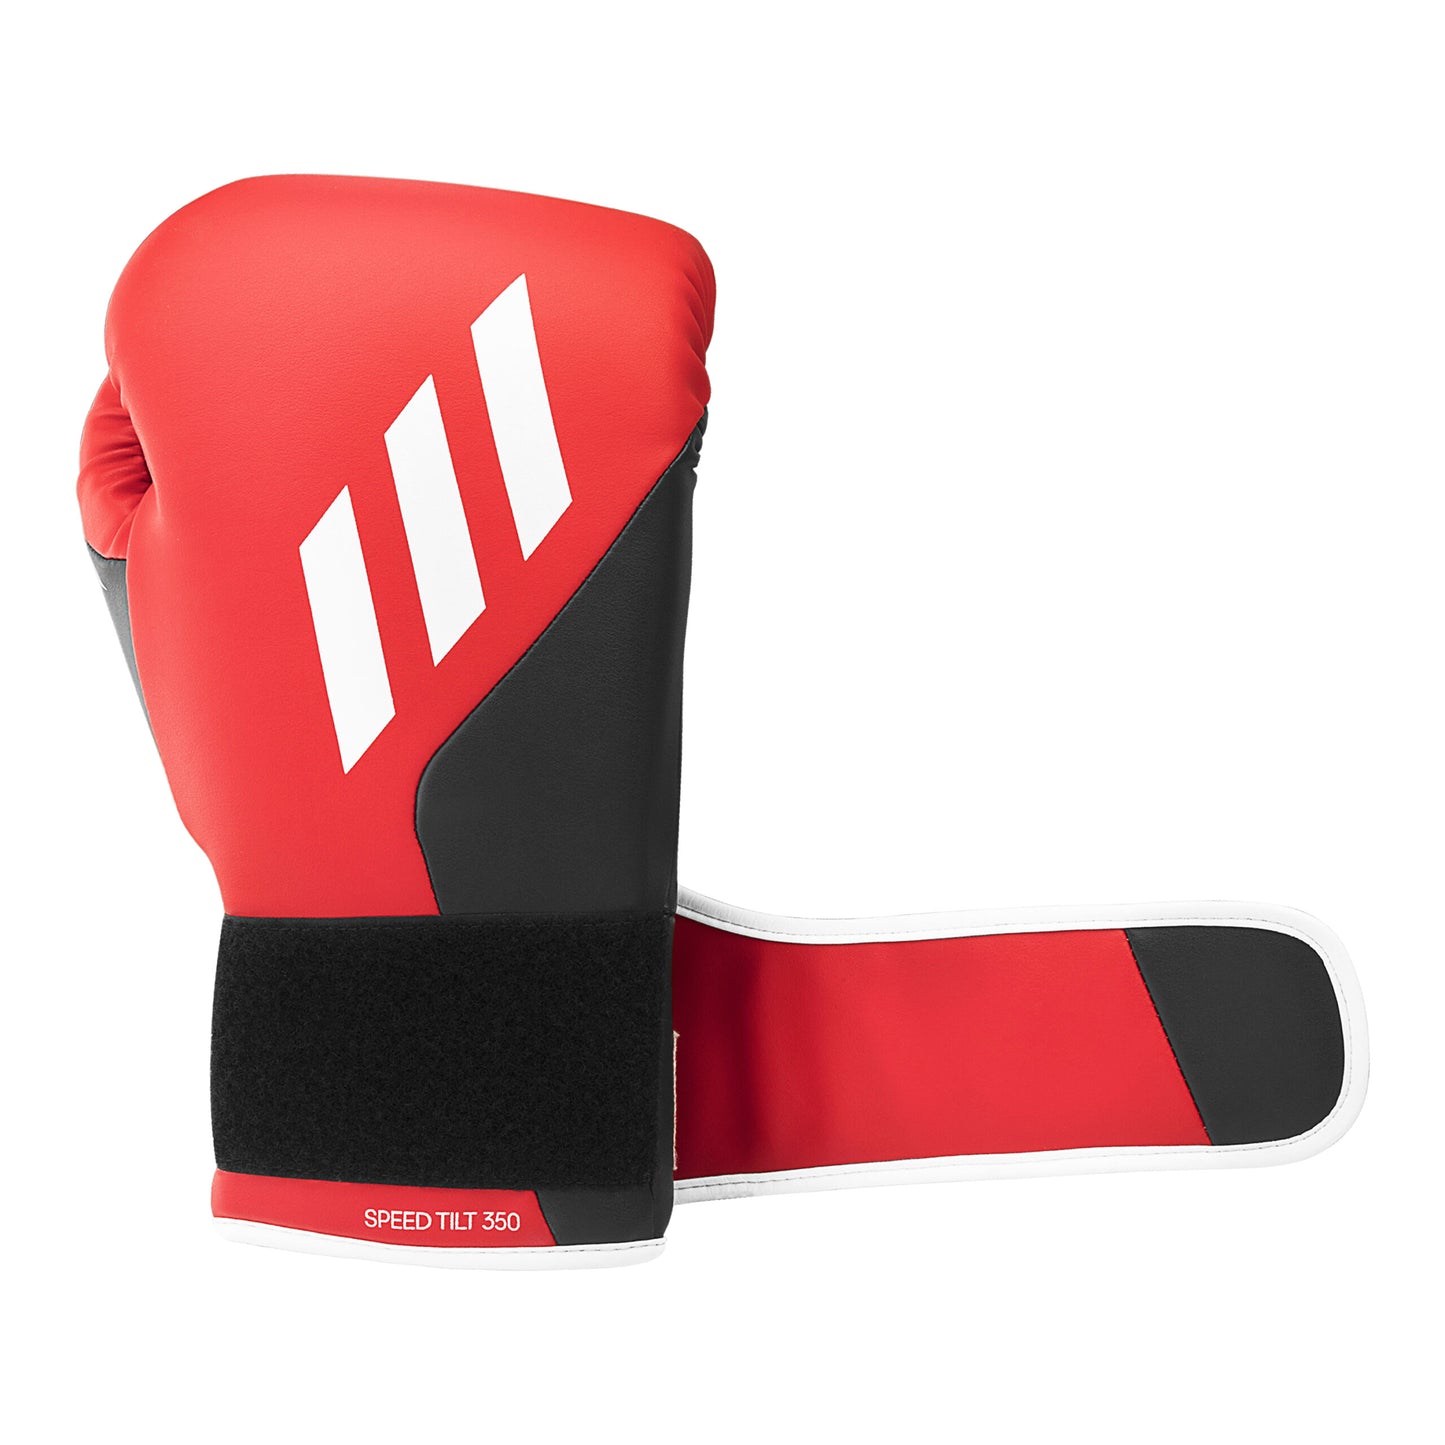 Adispd350tg Adidas Tilt 350 Pro Training Boxing Glove Strap Active Red Black 05